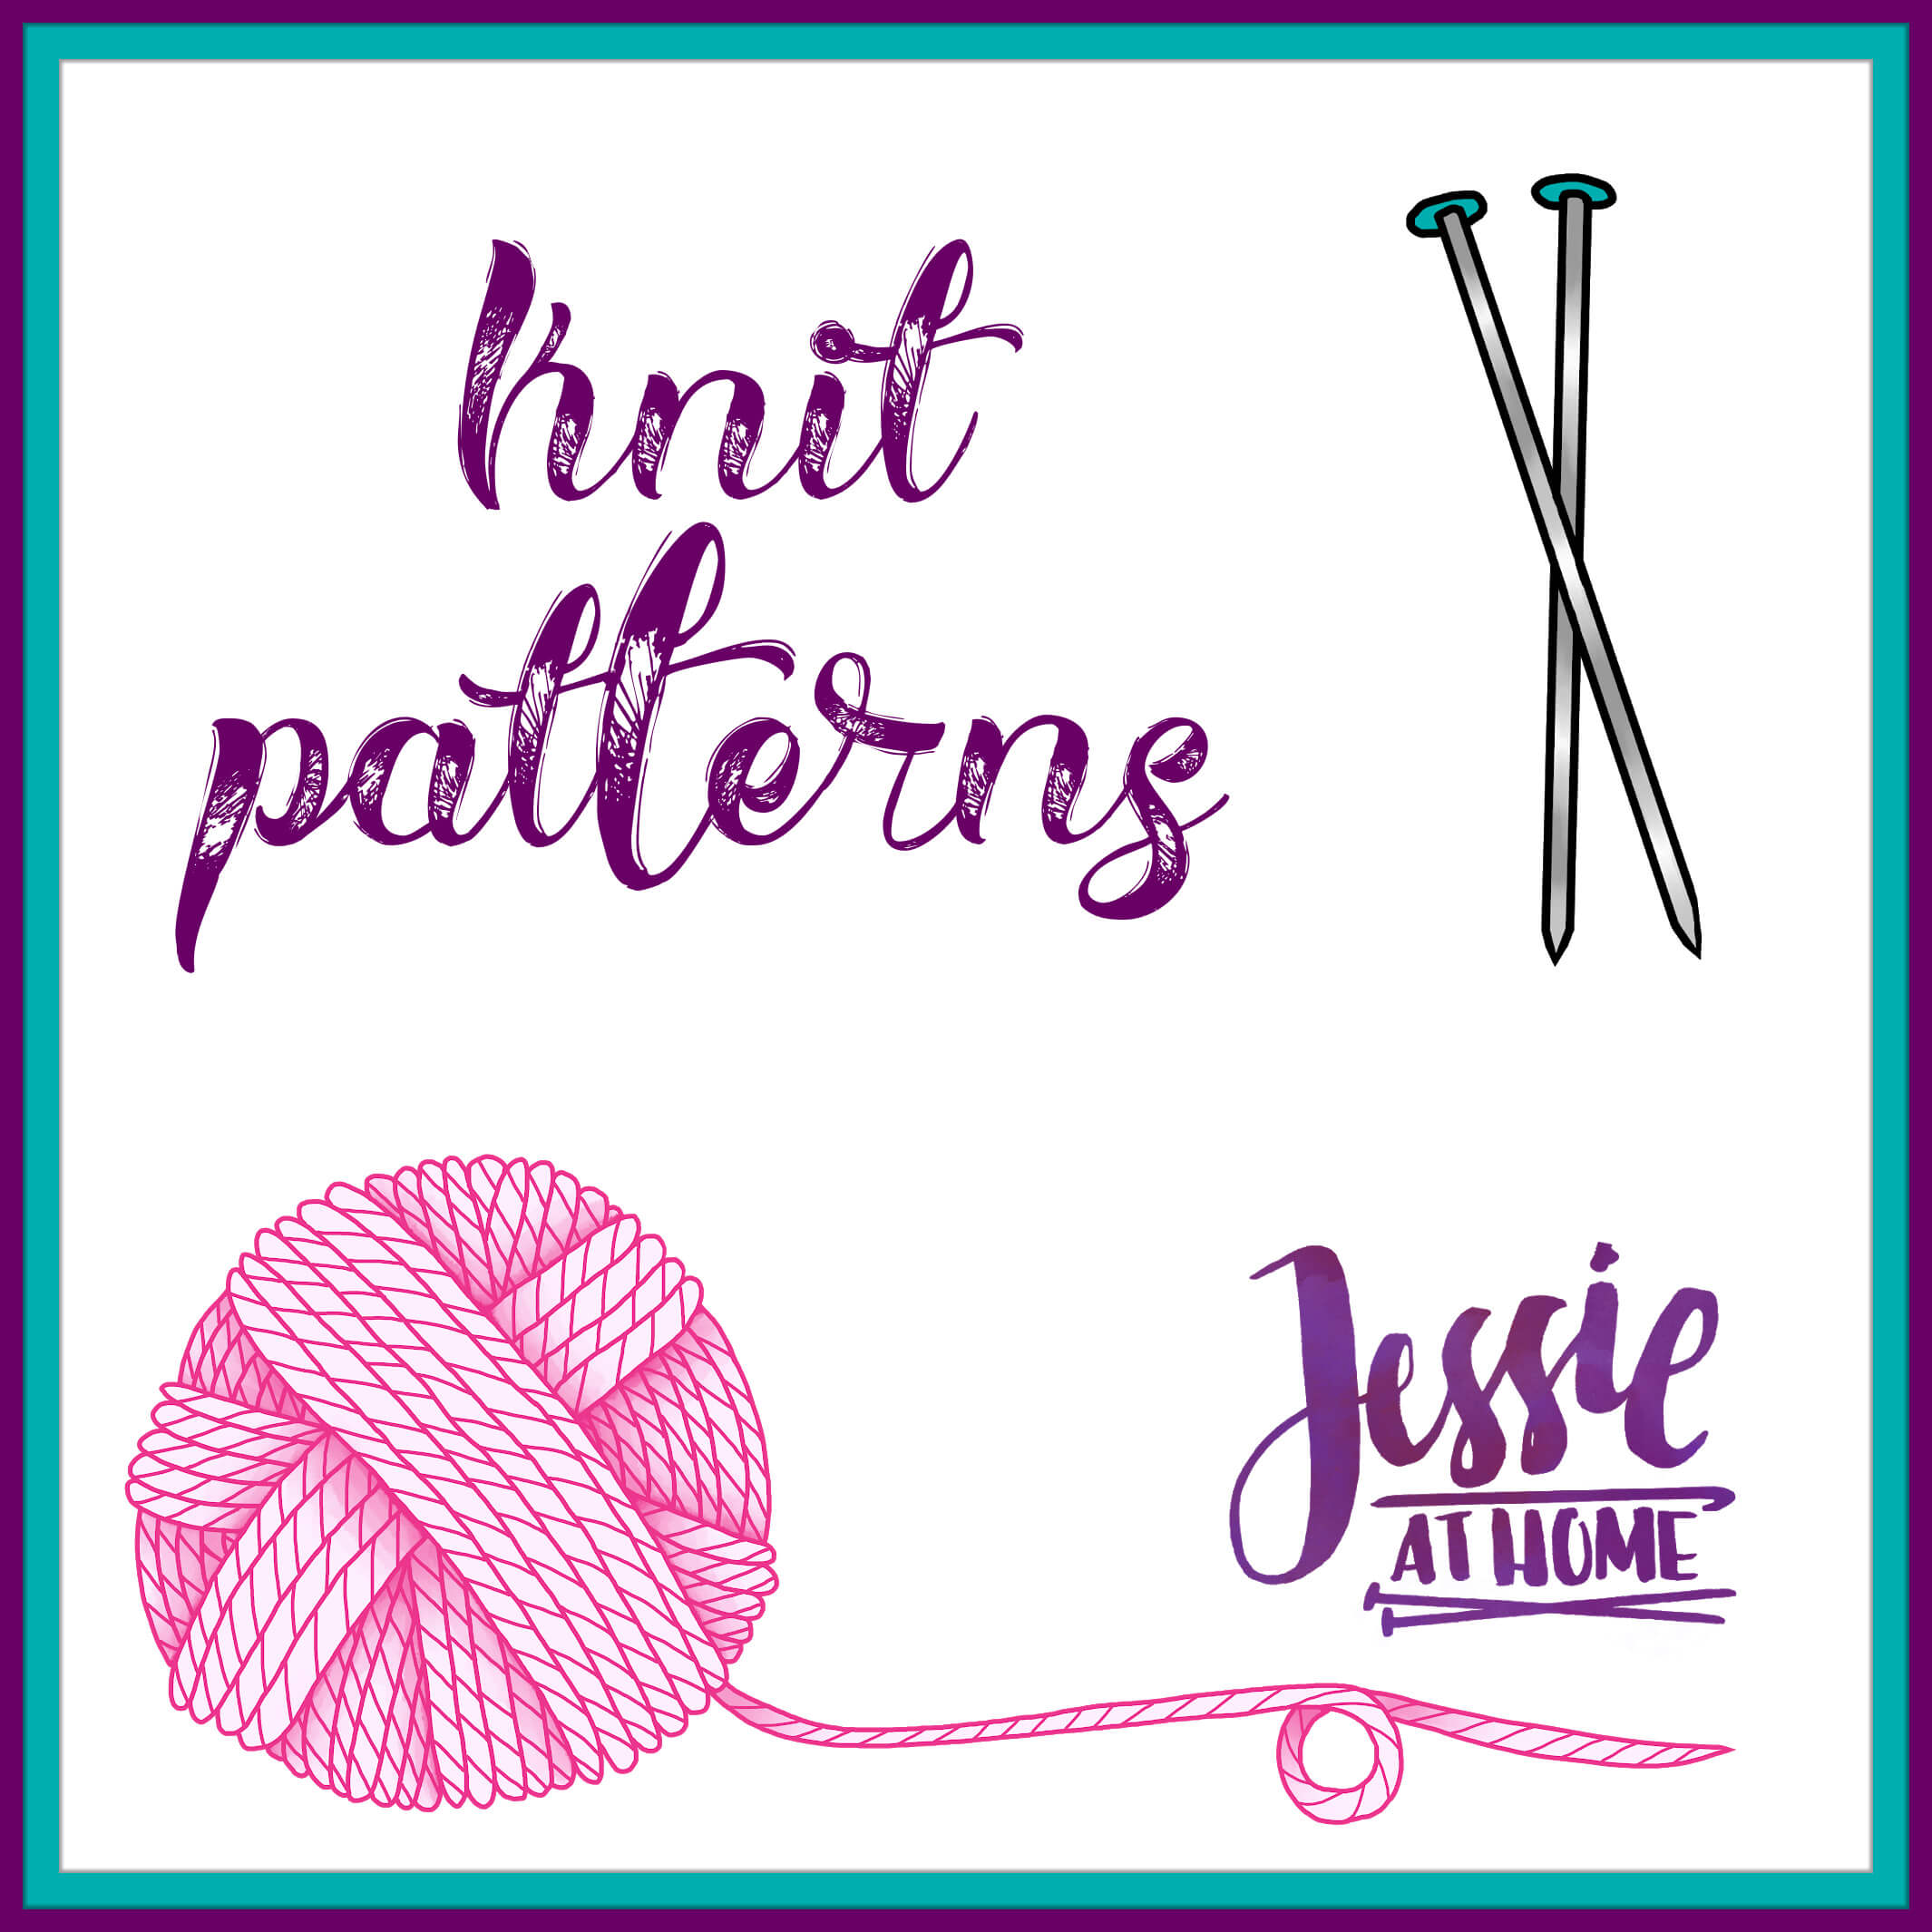 Knit Pattern Menu on Jessie At Home